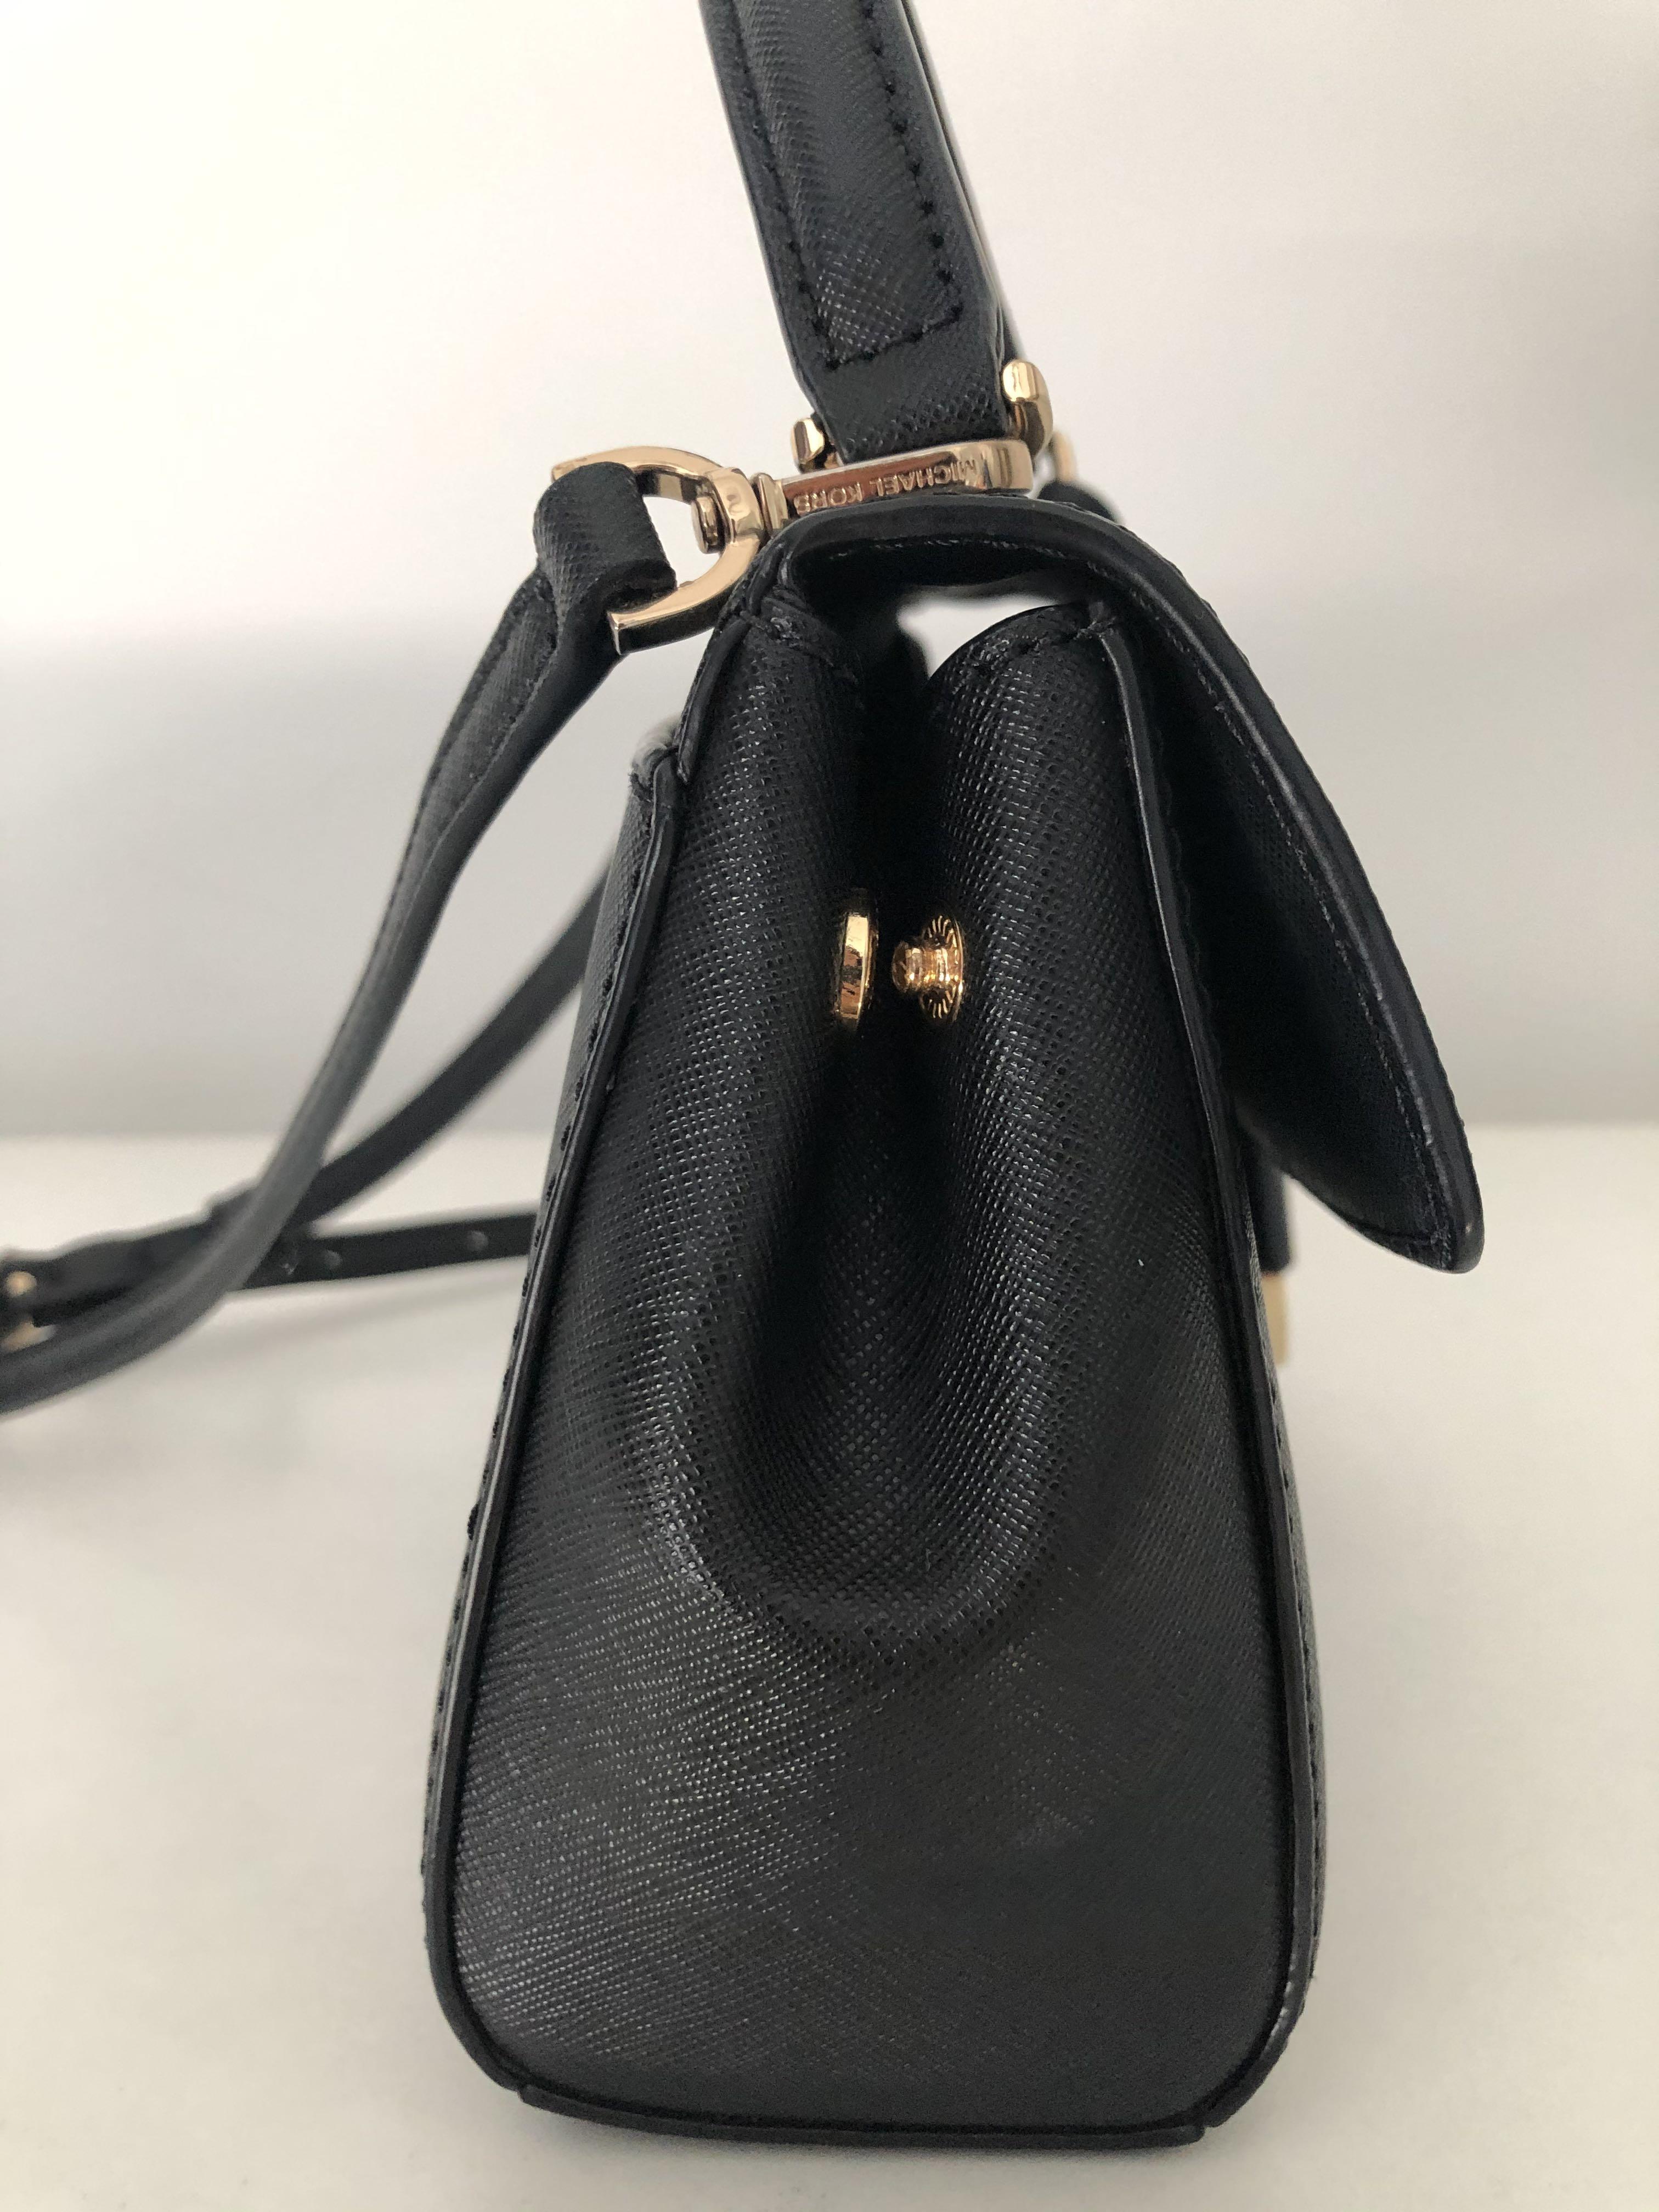 Michael Kors Ava Extra-Small Saffiano Leather Crossbody Bag Olive